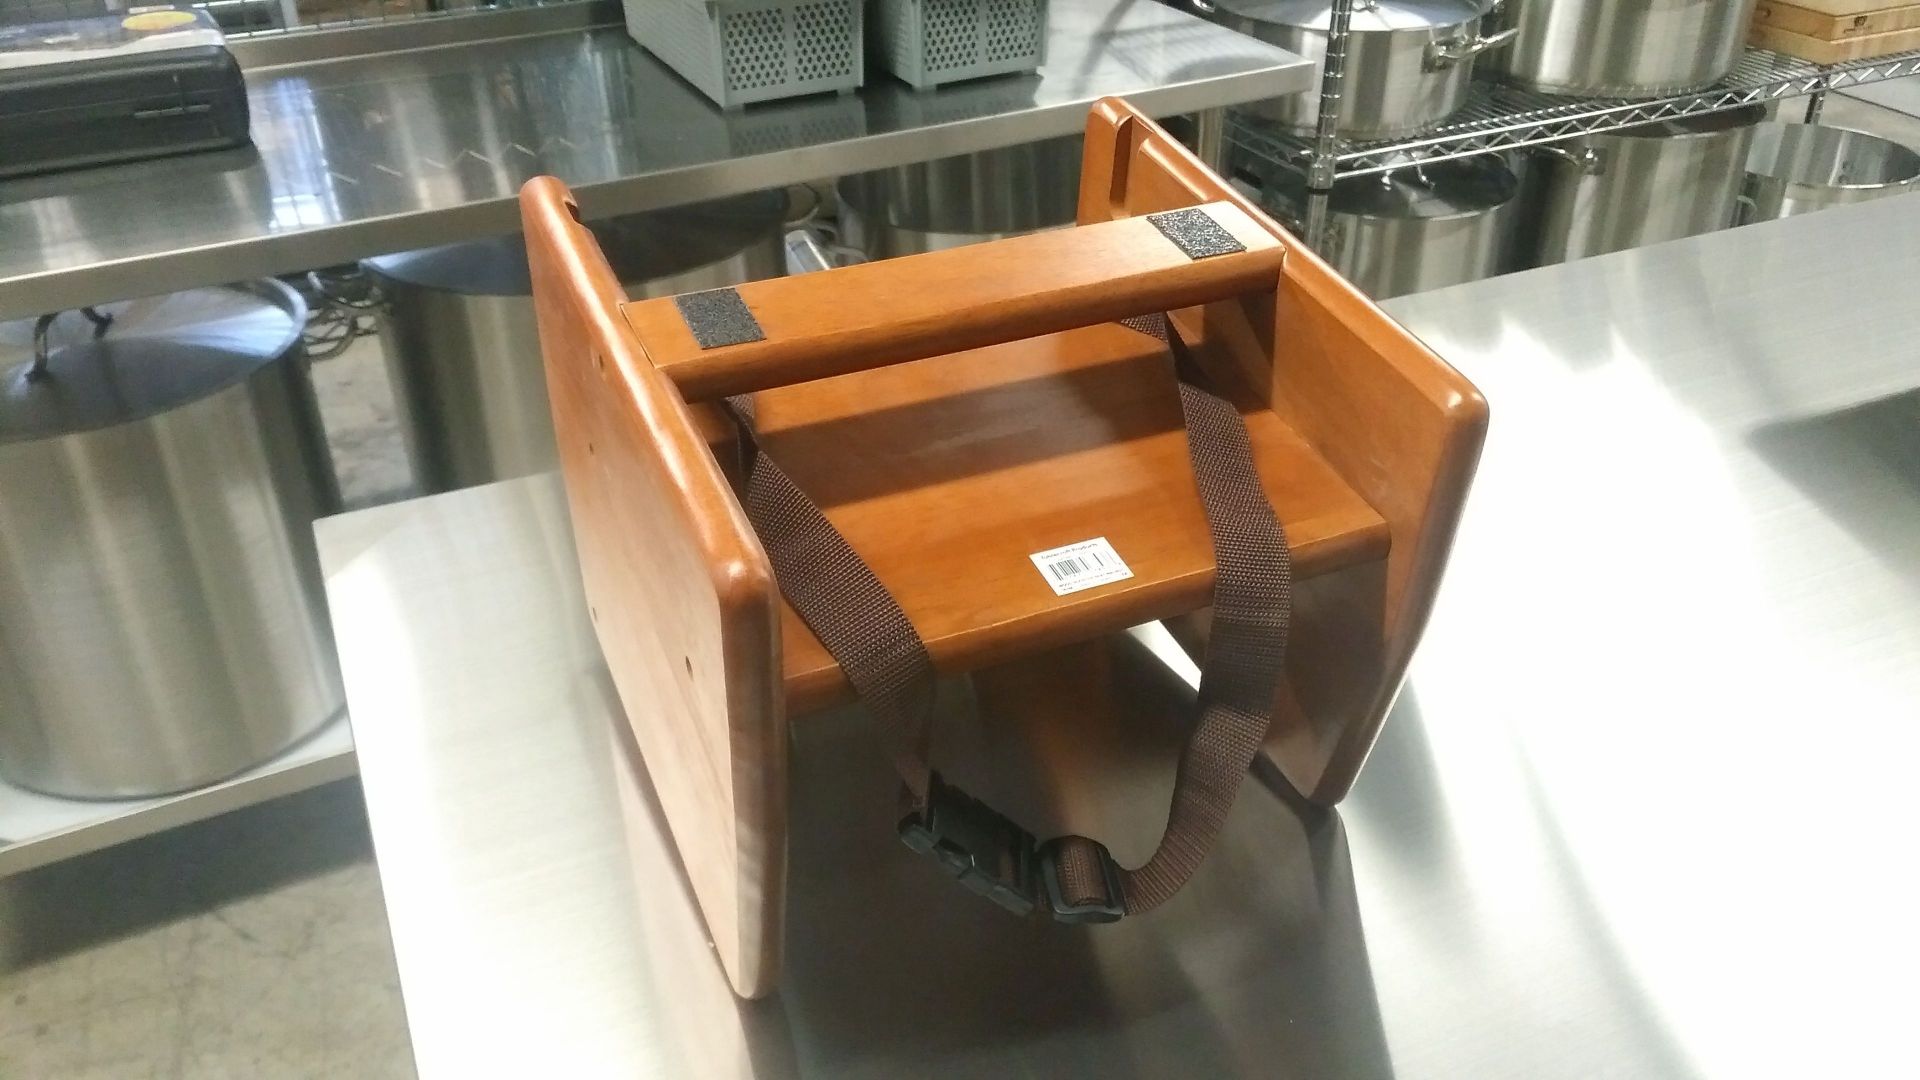 Wood Booster Seat, 11.75" x 12" x 10.75", Walnut Finish - Image 4 of 5